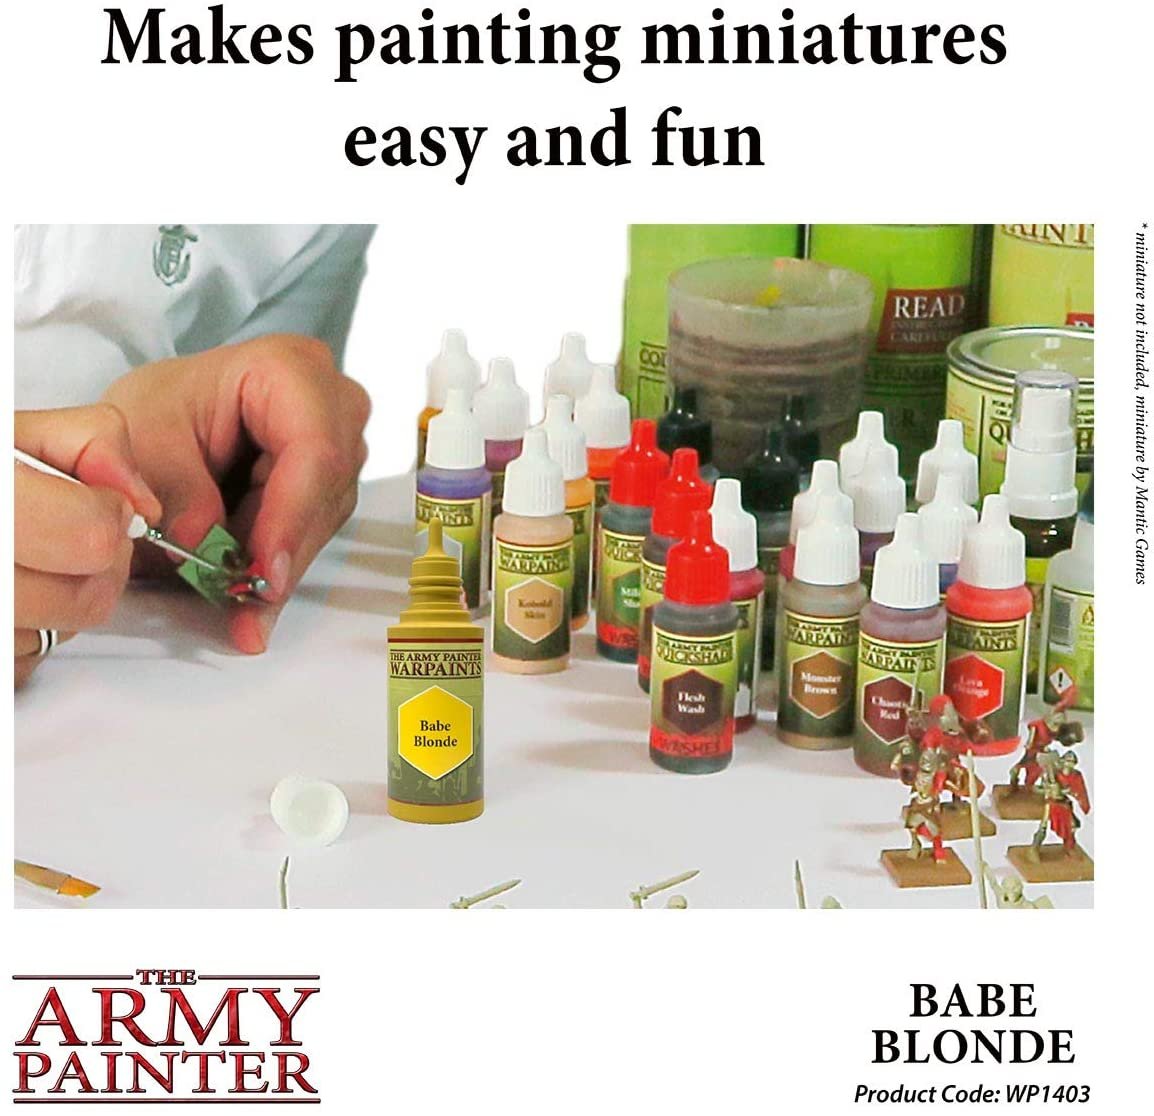 The Army Painter - Warpaints: Babe Blonde (18ml/0.6oz)